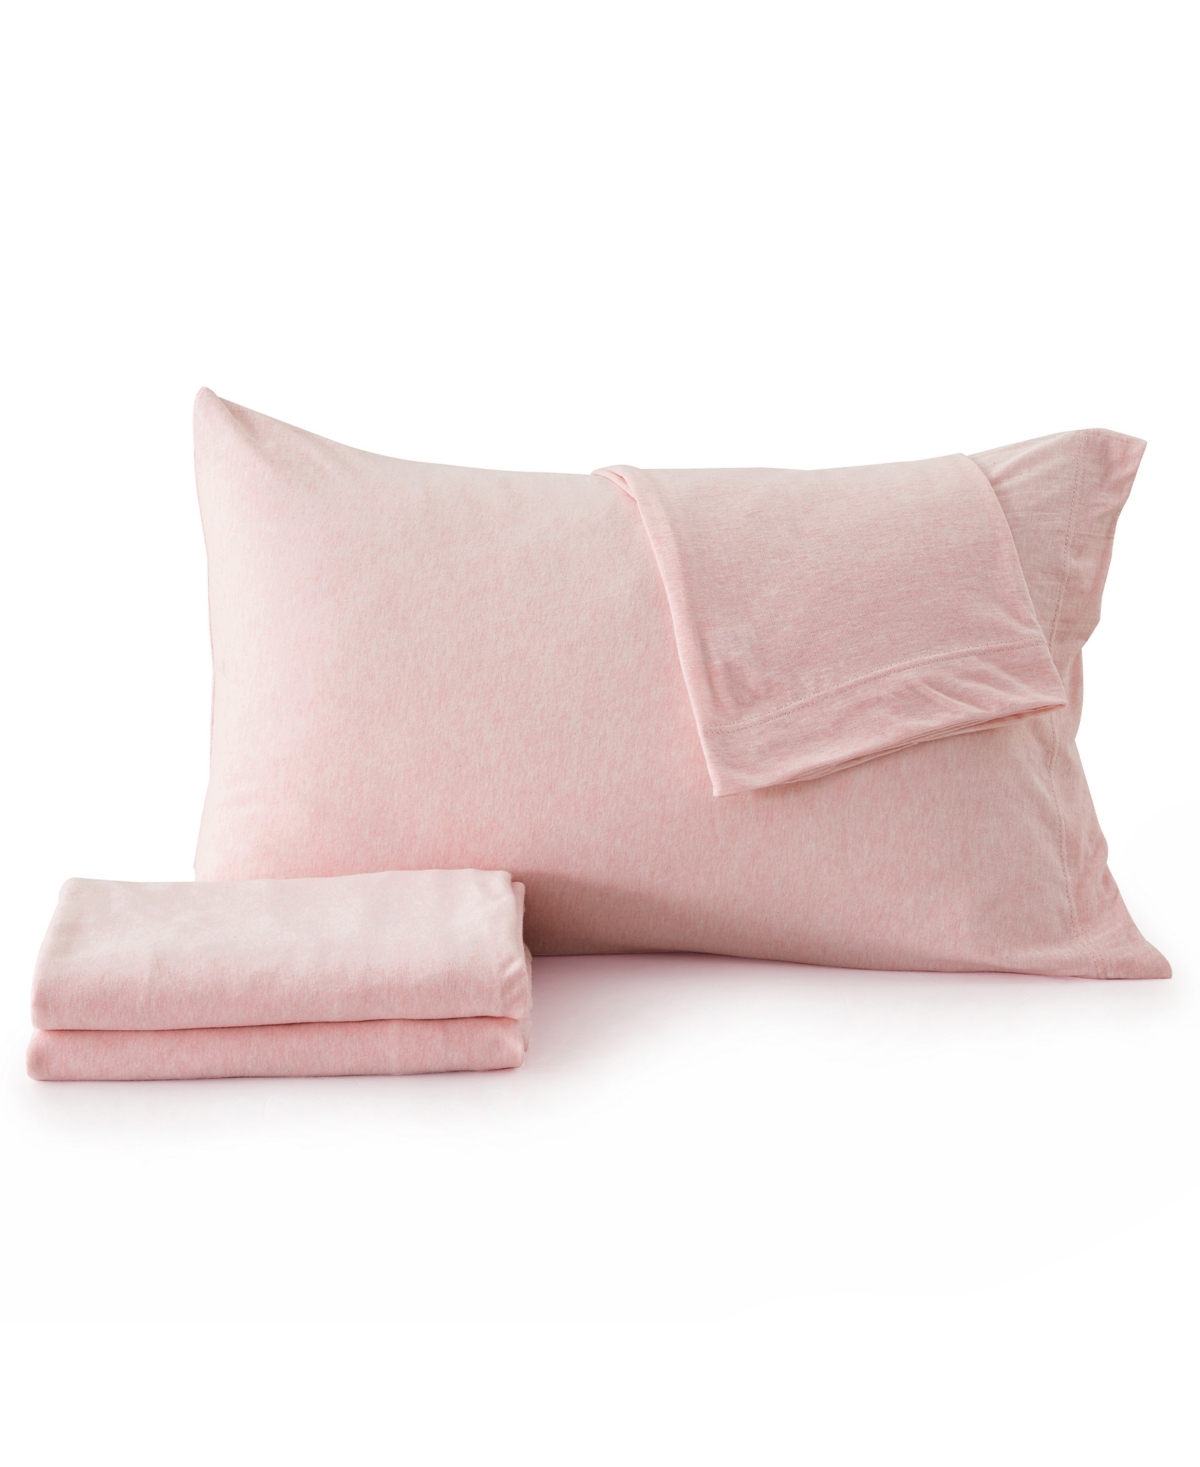 Premium Comforts Heathered Melange T-shirt Jersey Knit Cotton Blend 4 Piece Sheet Set, Full In Pink